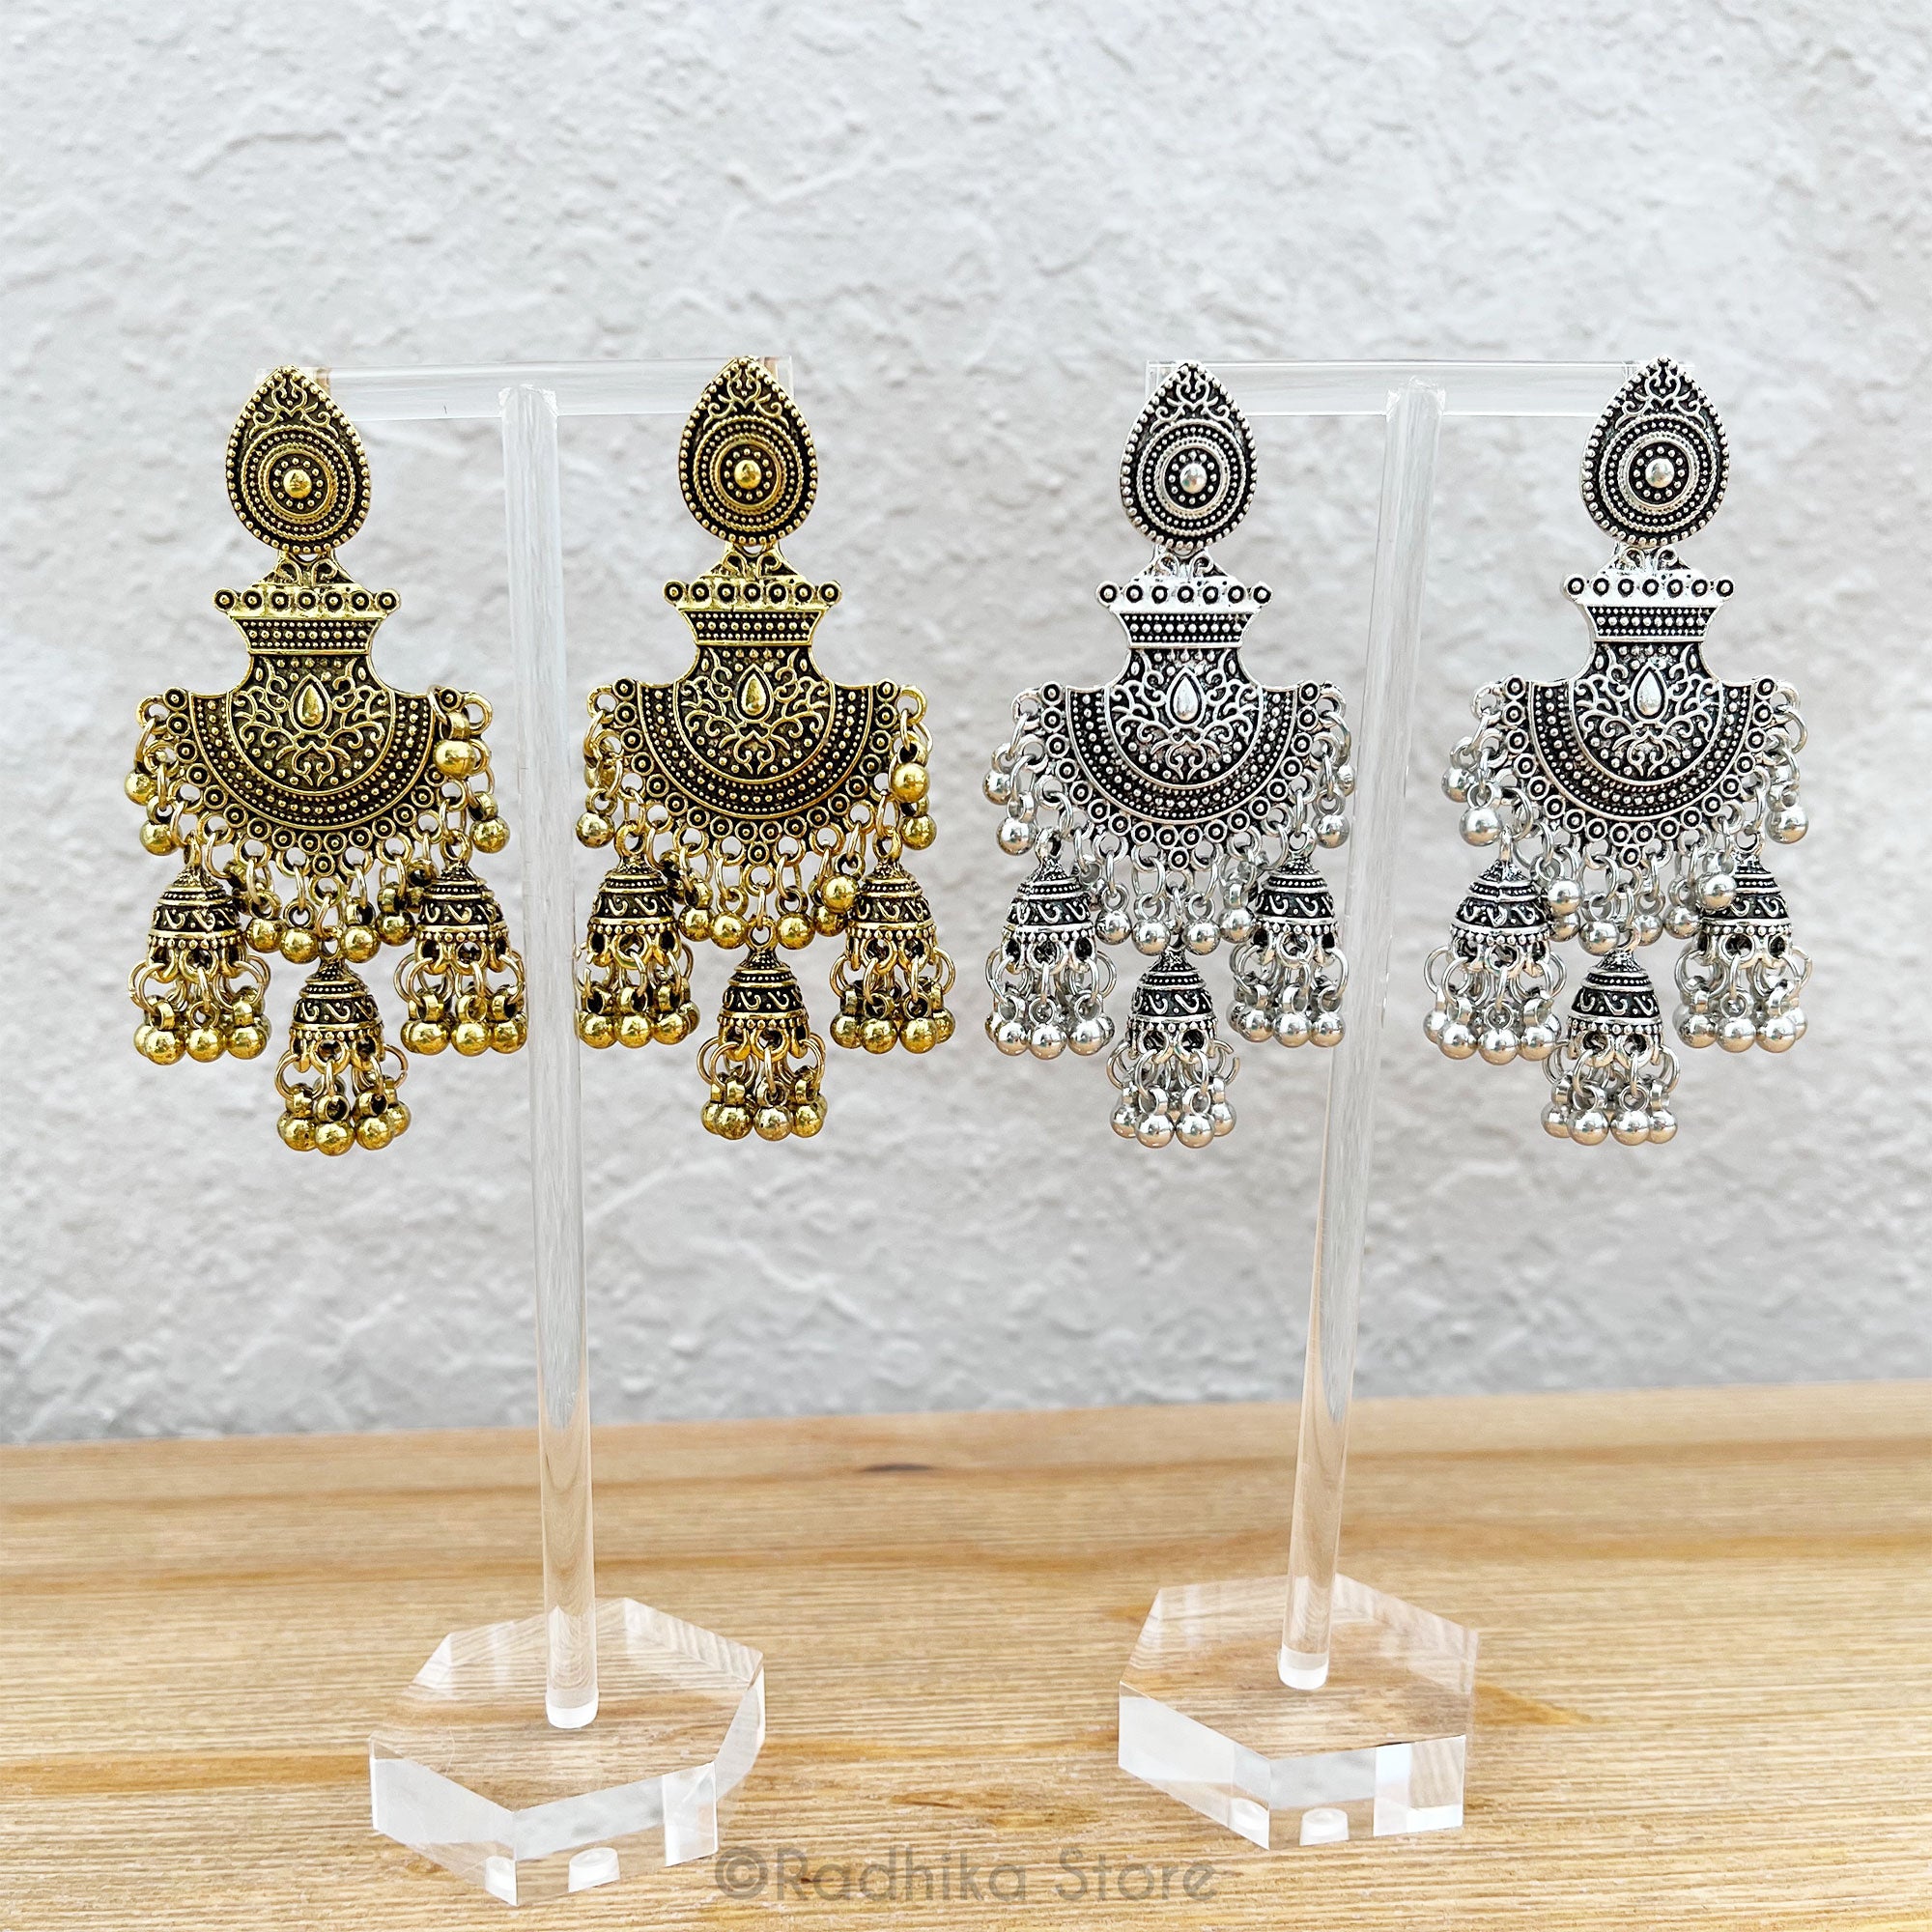 Golden Big Jhumka Earring with Golden and Pearl beads | Jhumka earrings,  Temple jewellery earrings, Jhumka